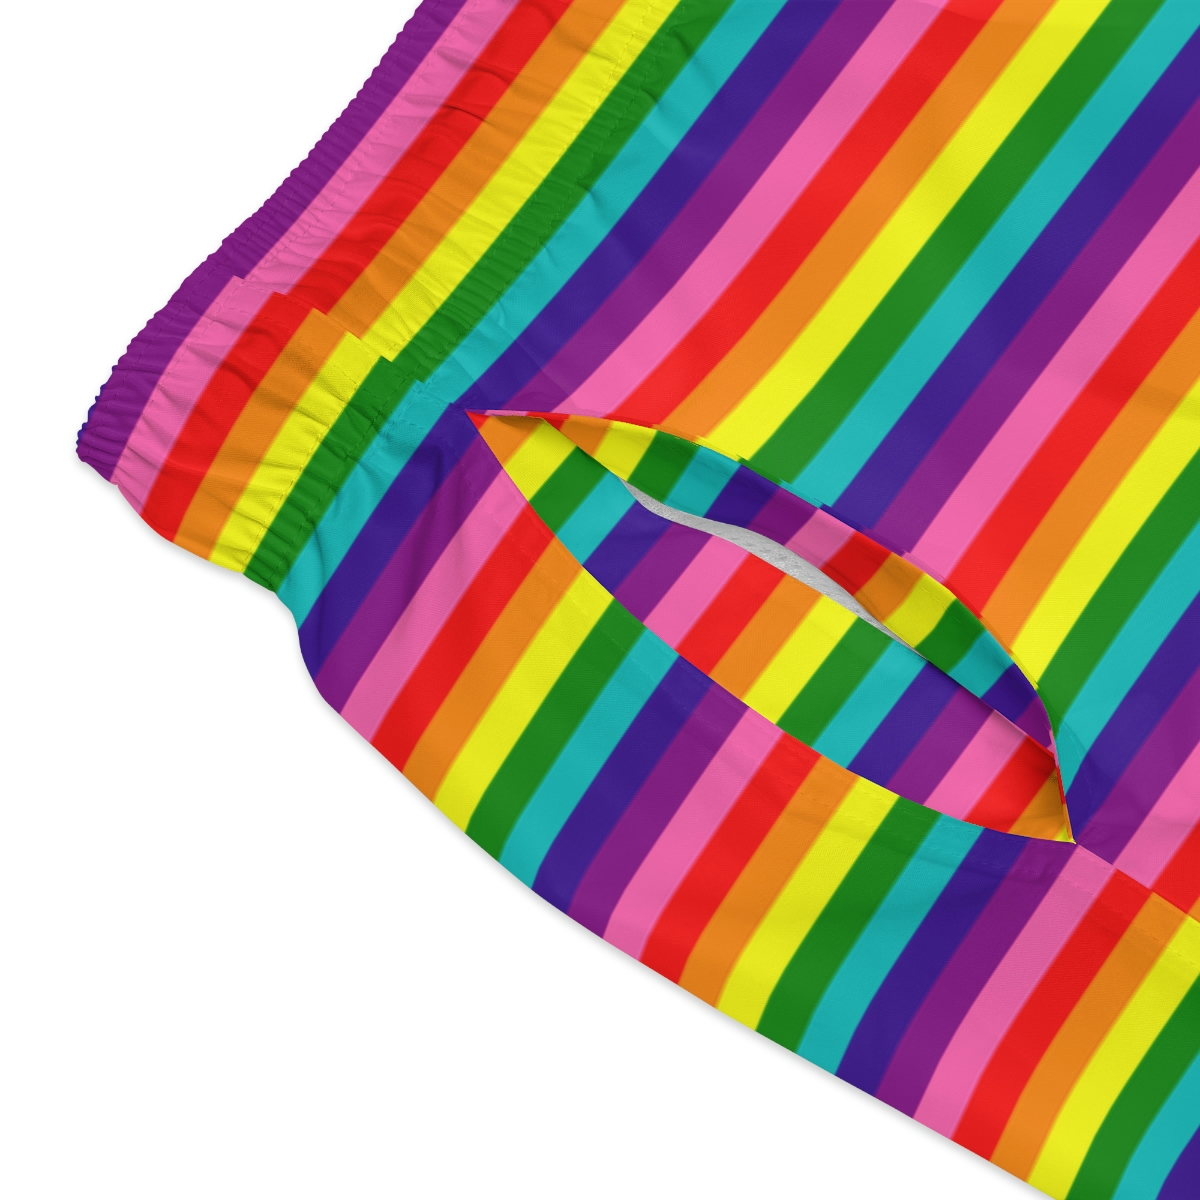 Original Eight Stripe Rainbow Flag Shorts